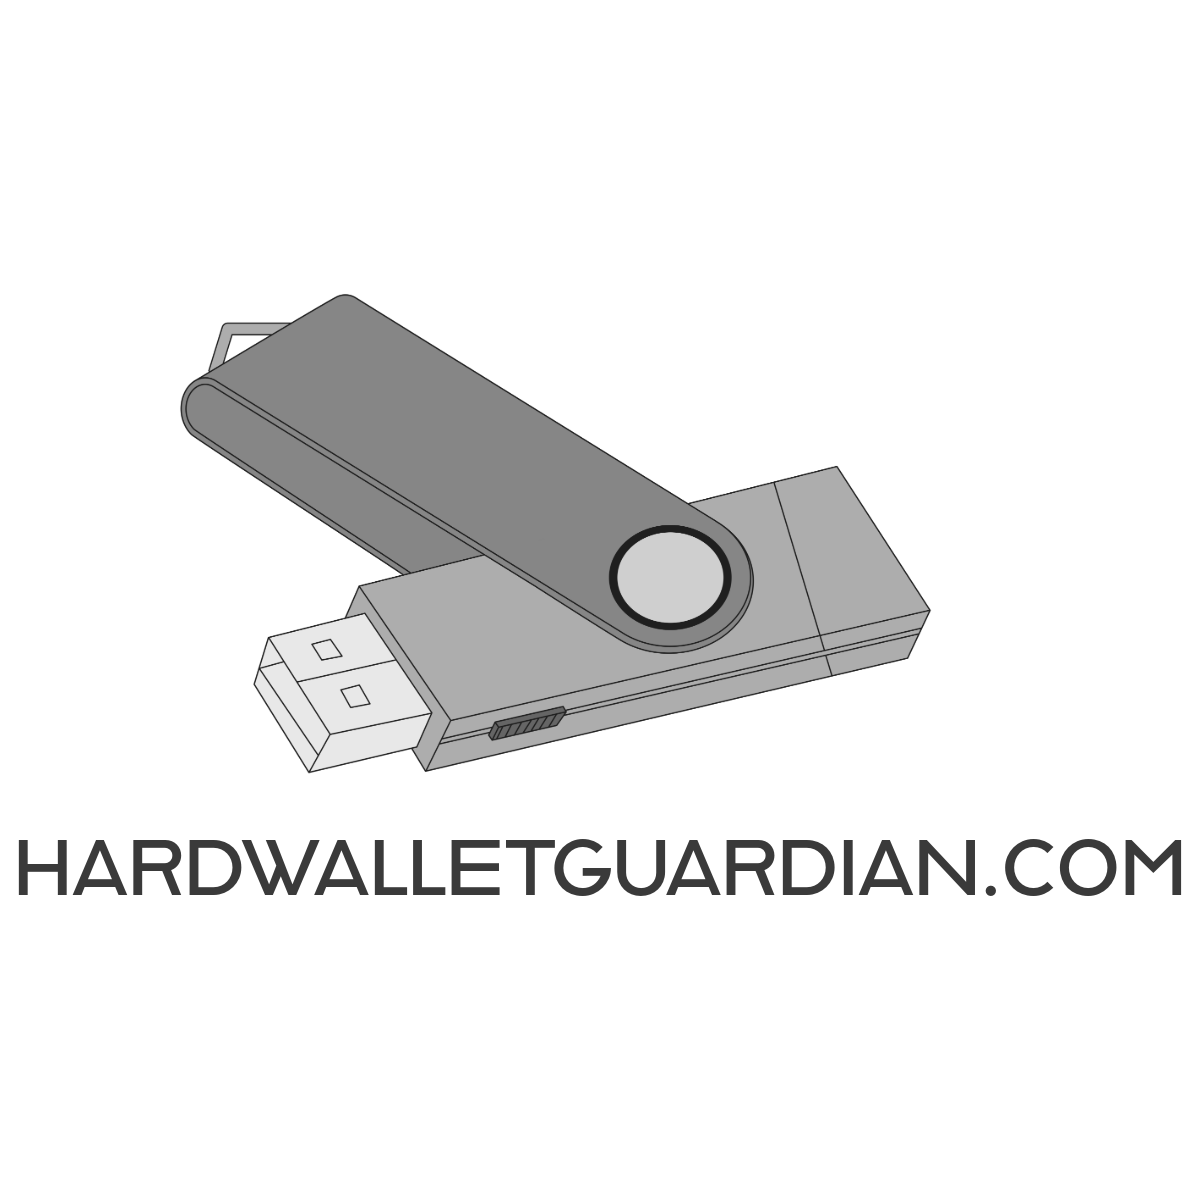 hardwalletguardian.com